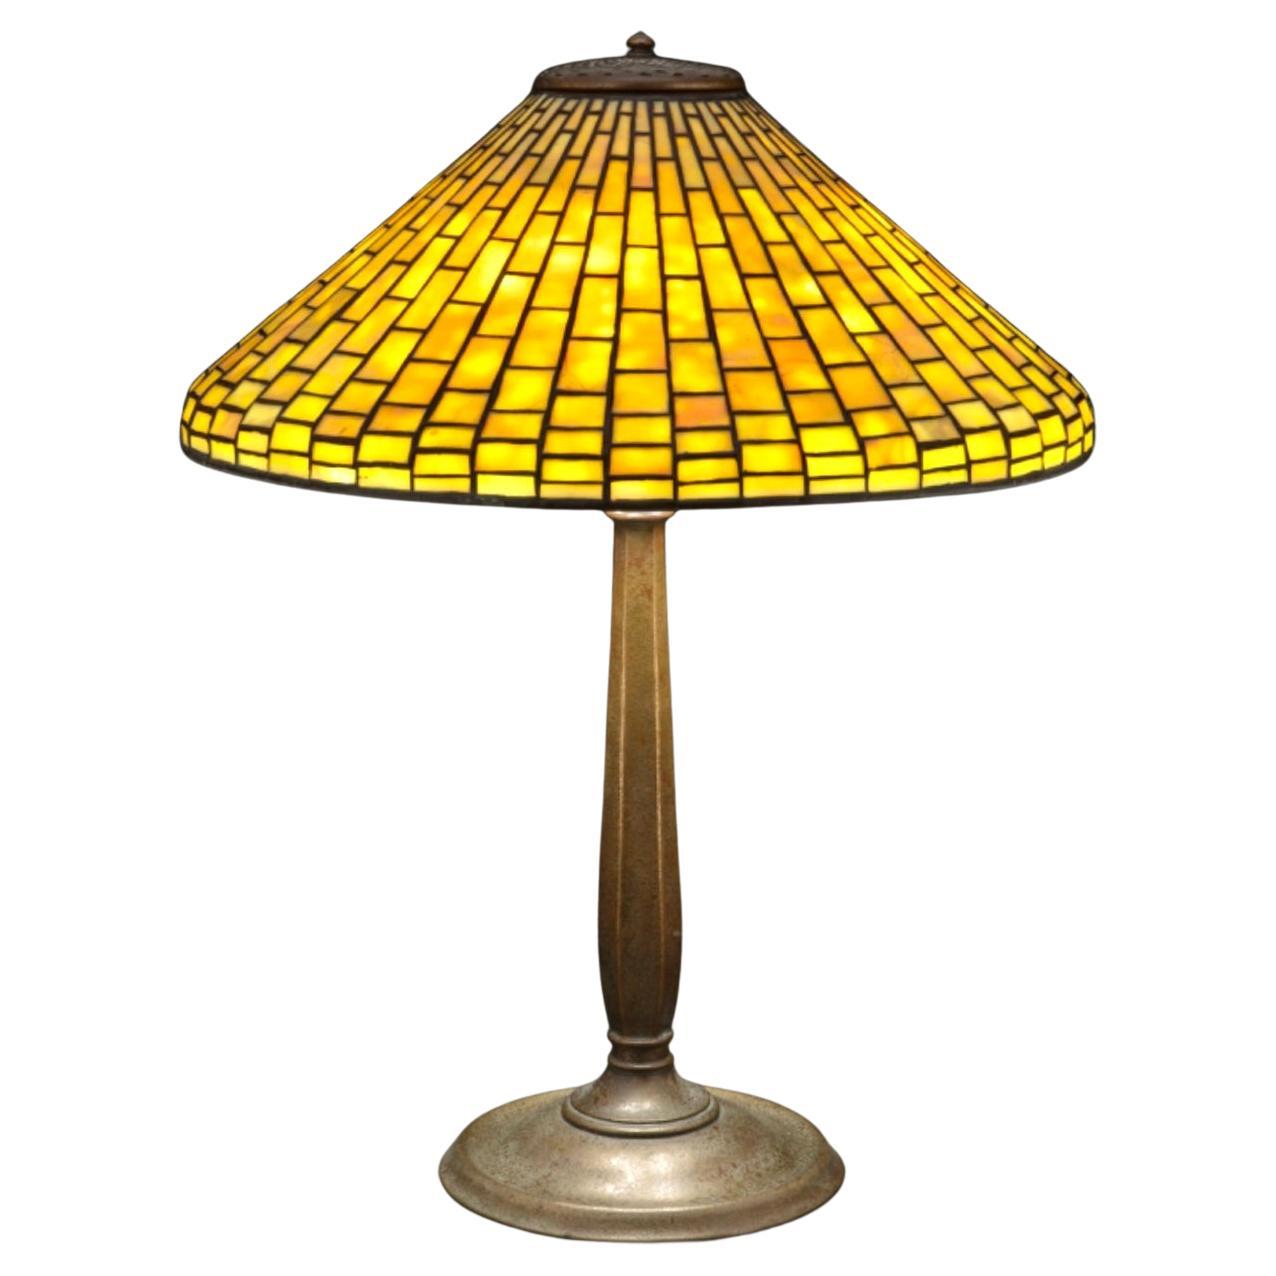 Tiffany Studios Geometric Table Lamp